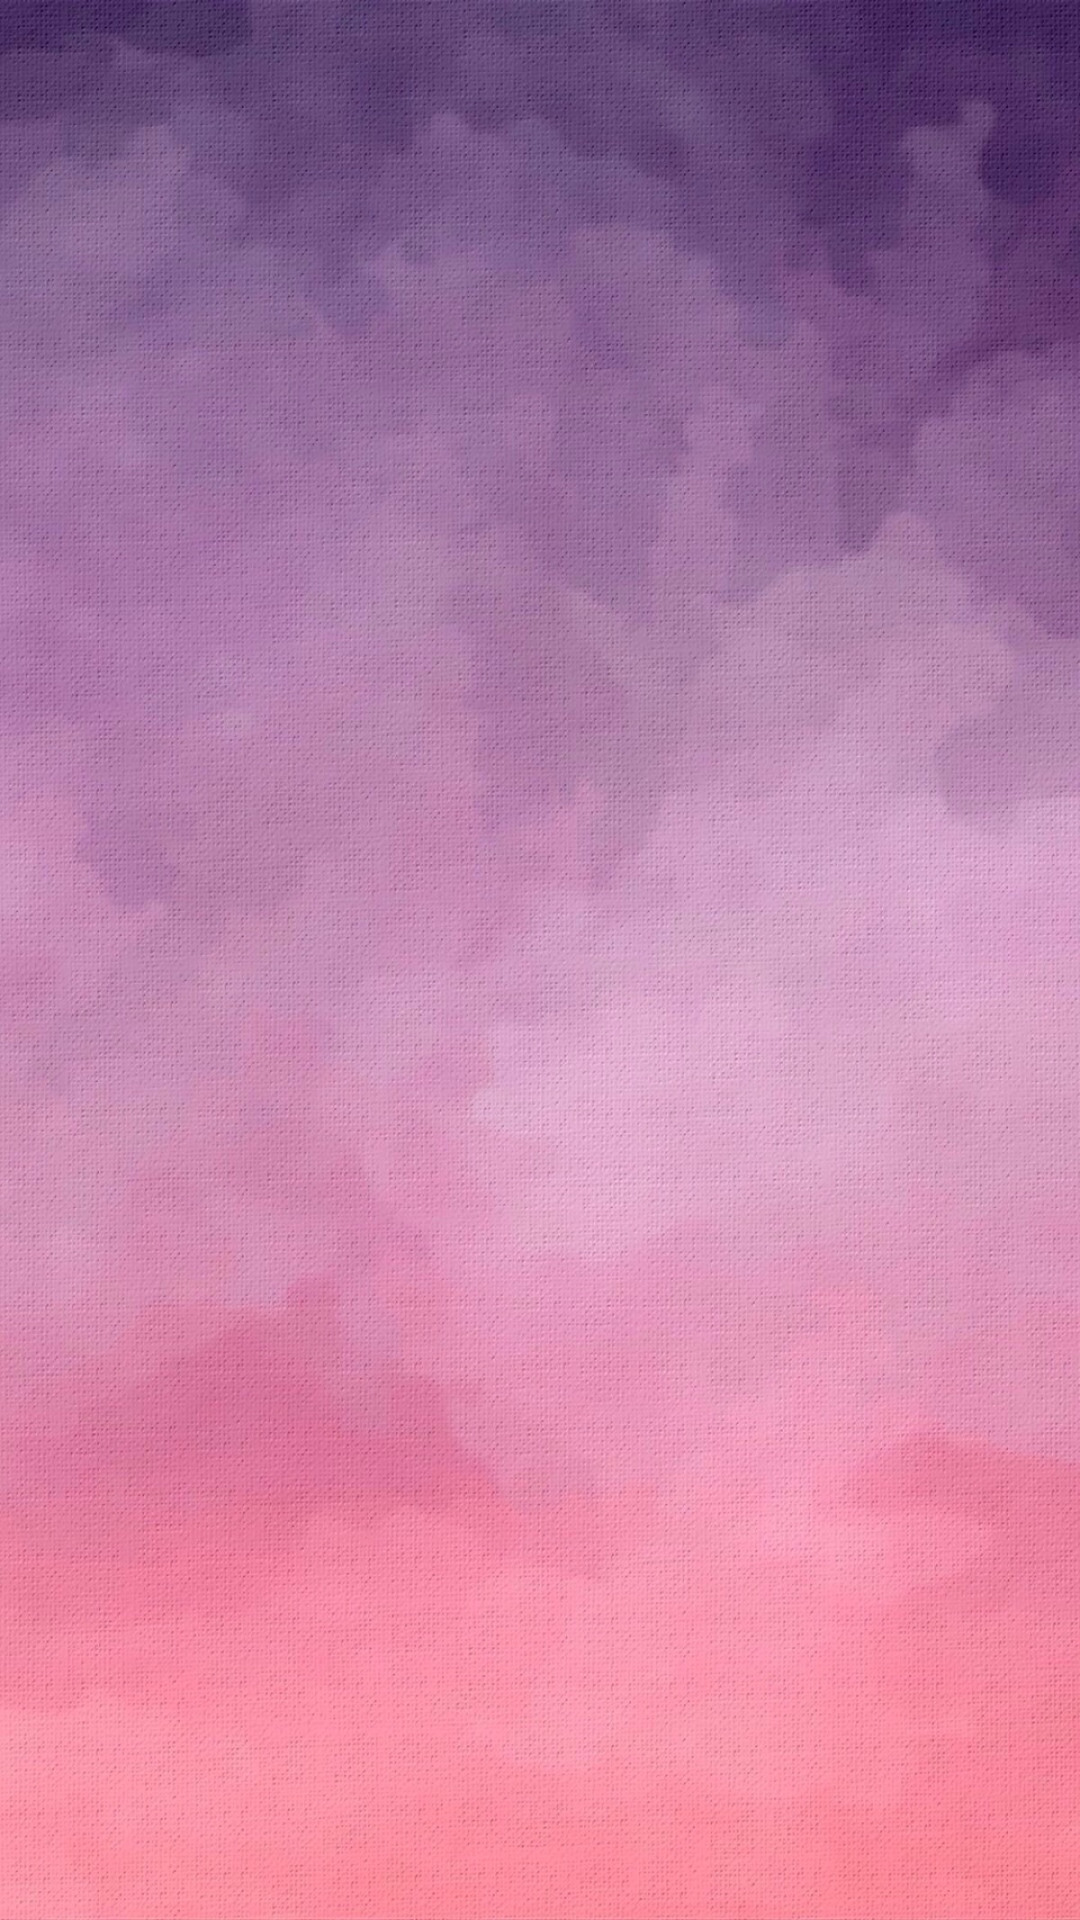 Free Cute Phone Wallpapers Backgrounds | PixelsTalk.Net